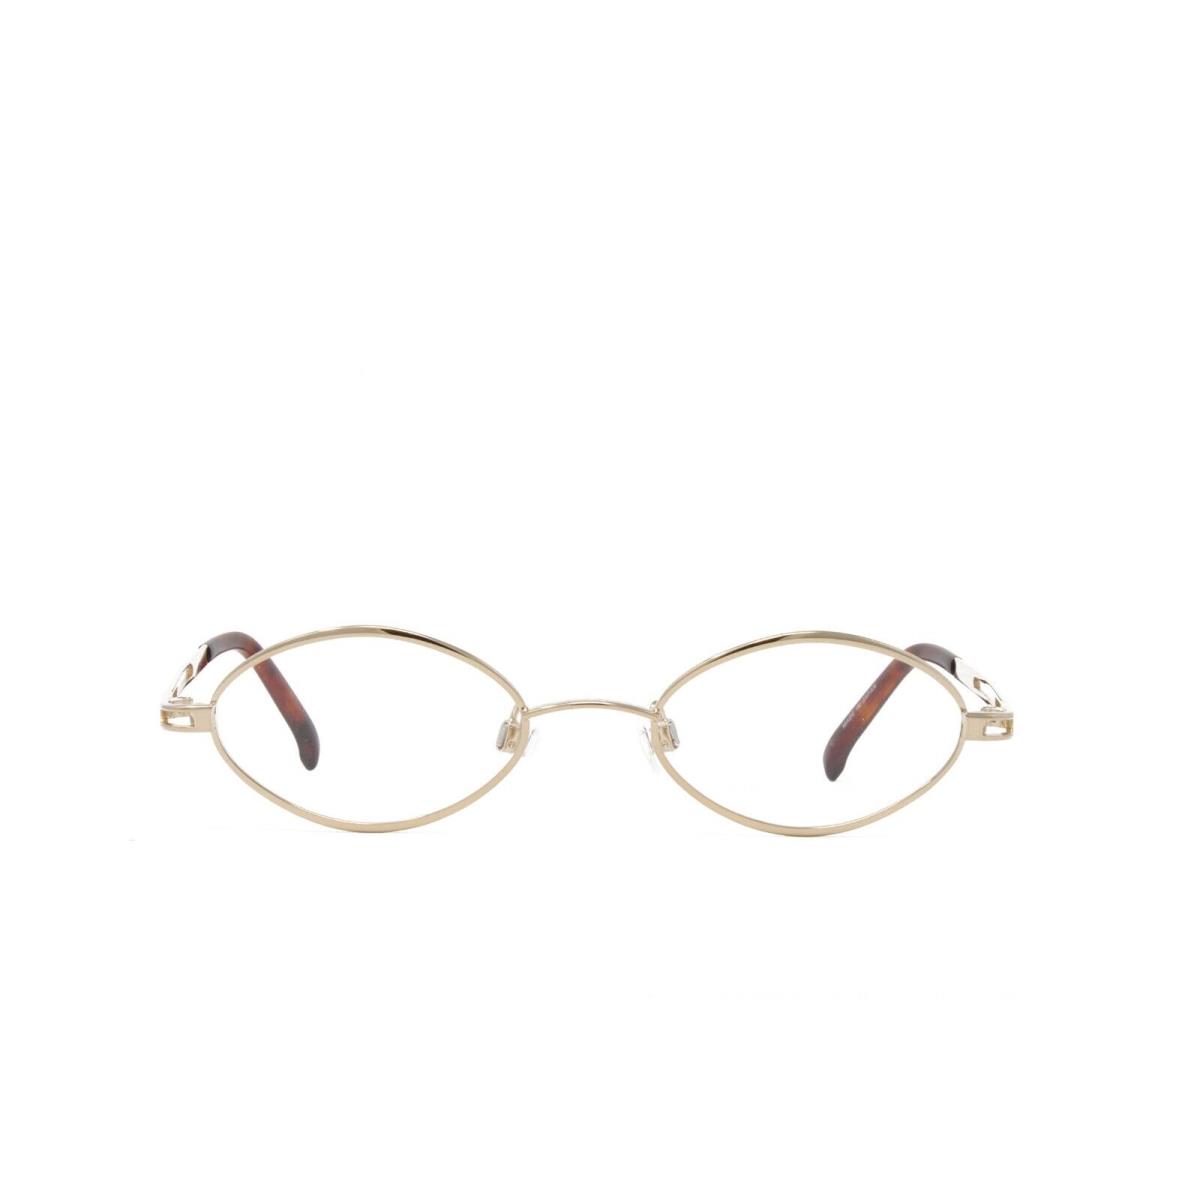 Michael Kors Eyeglasses MK18005 GP Gold / 47mm Demo Lens